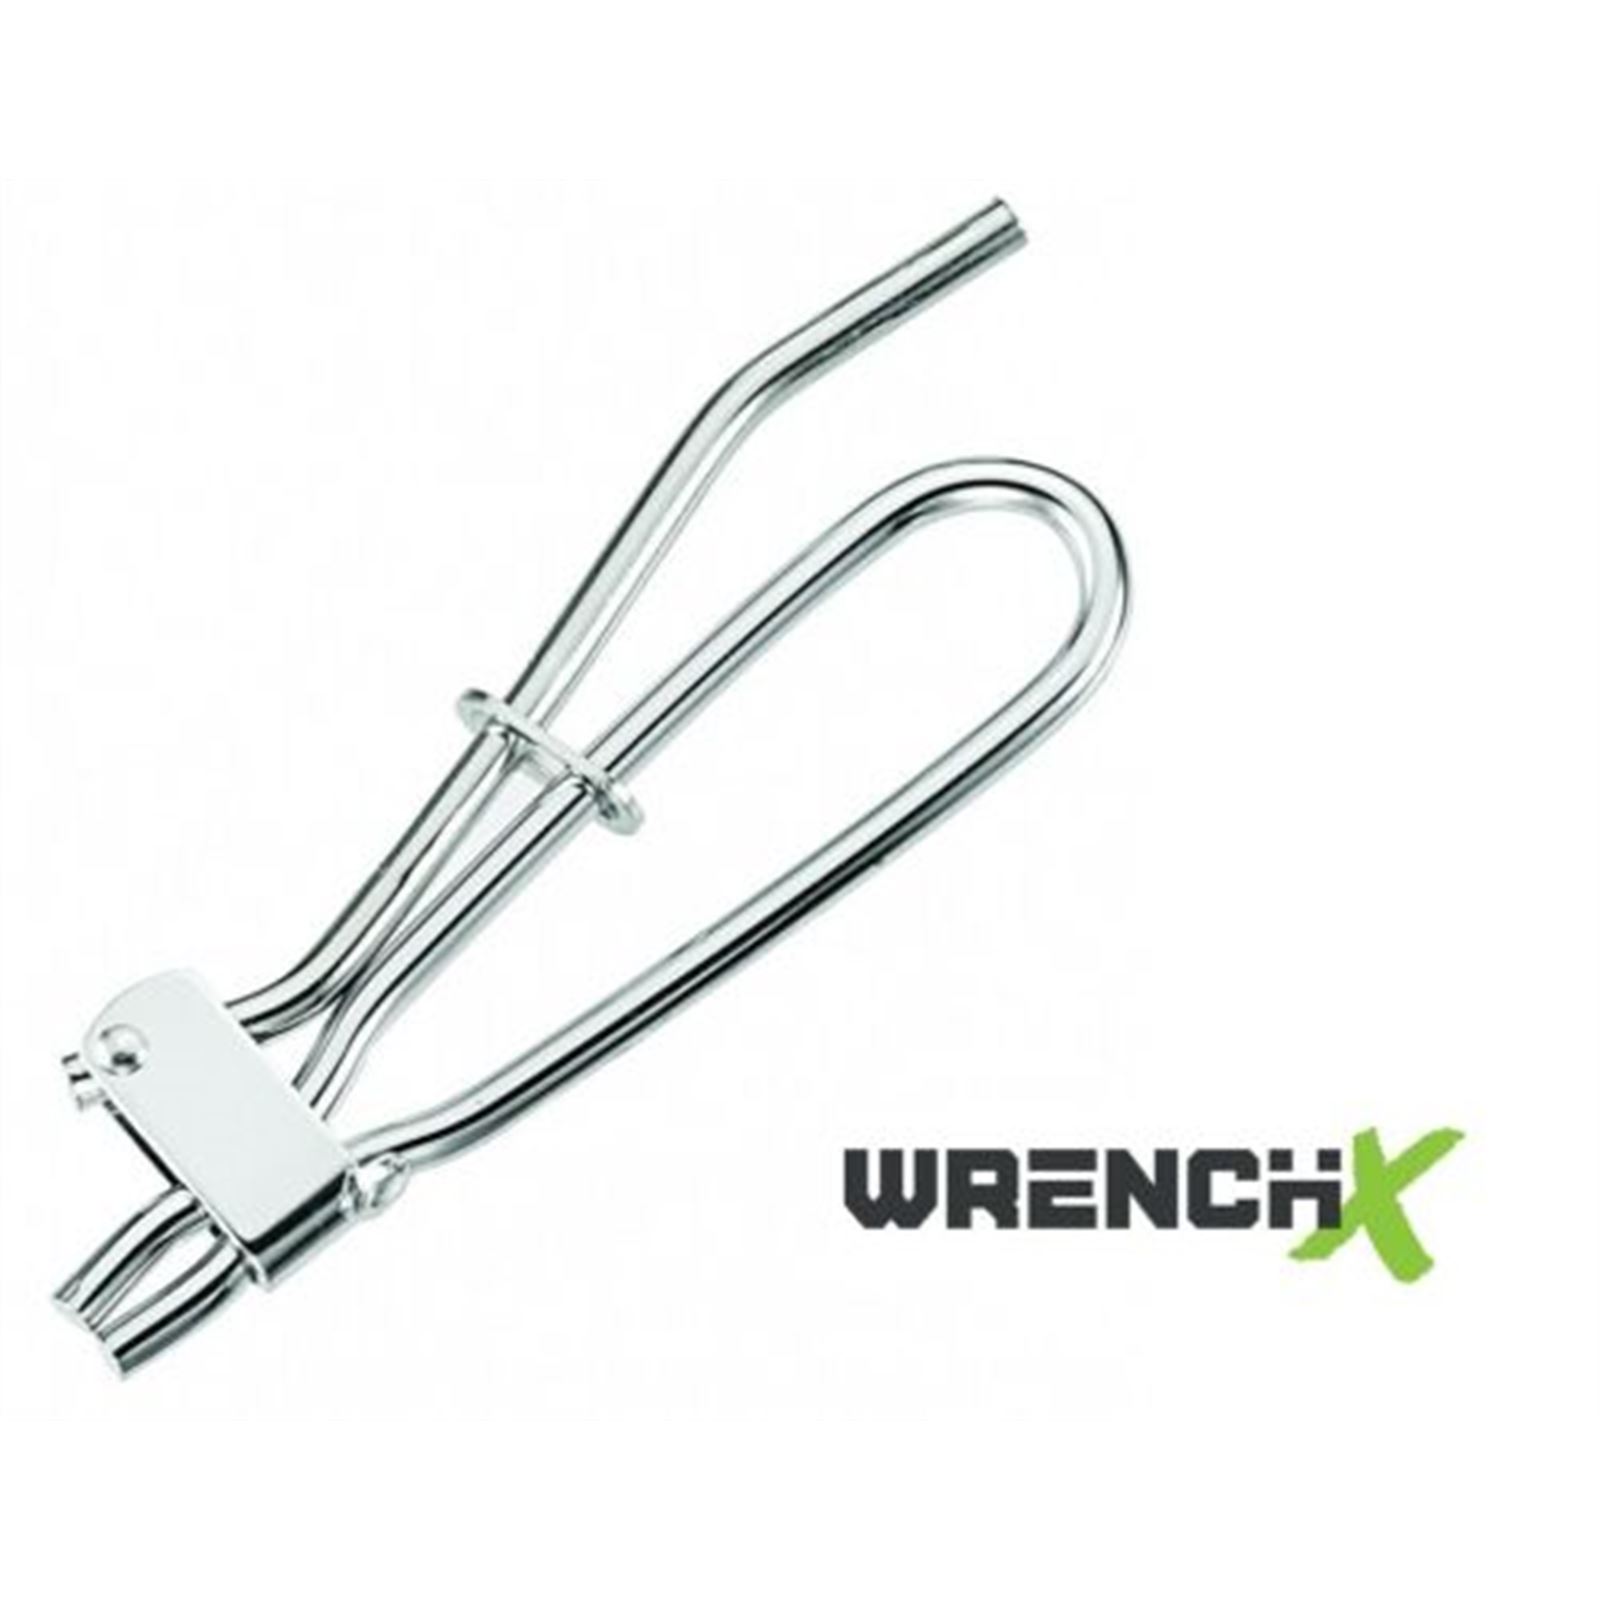 Wrench-X Fluid Hose Clamp Tool Brake Gas Fuel Hydraulic Vacuum Flexible Line NEW